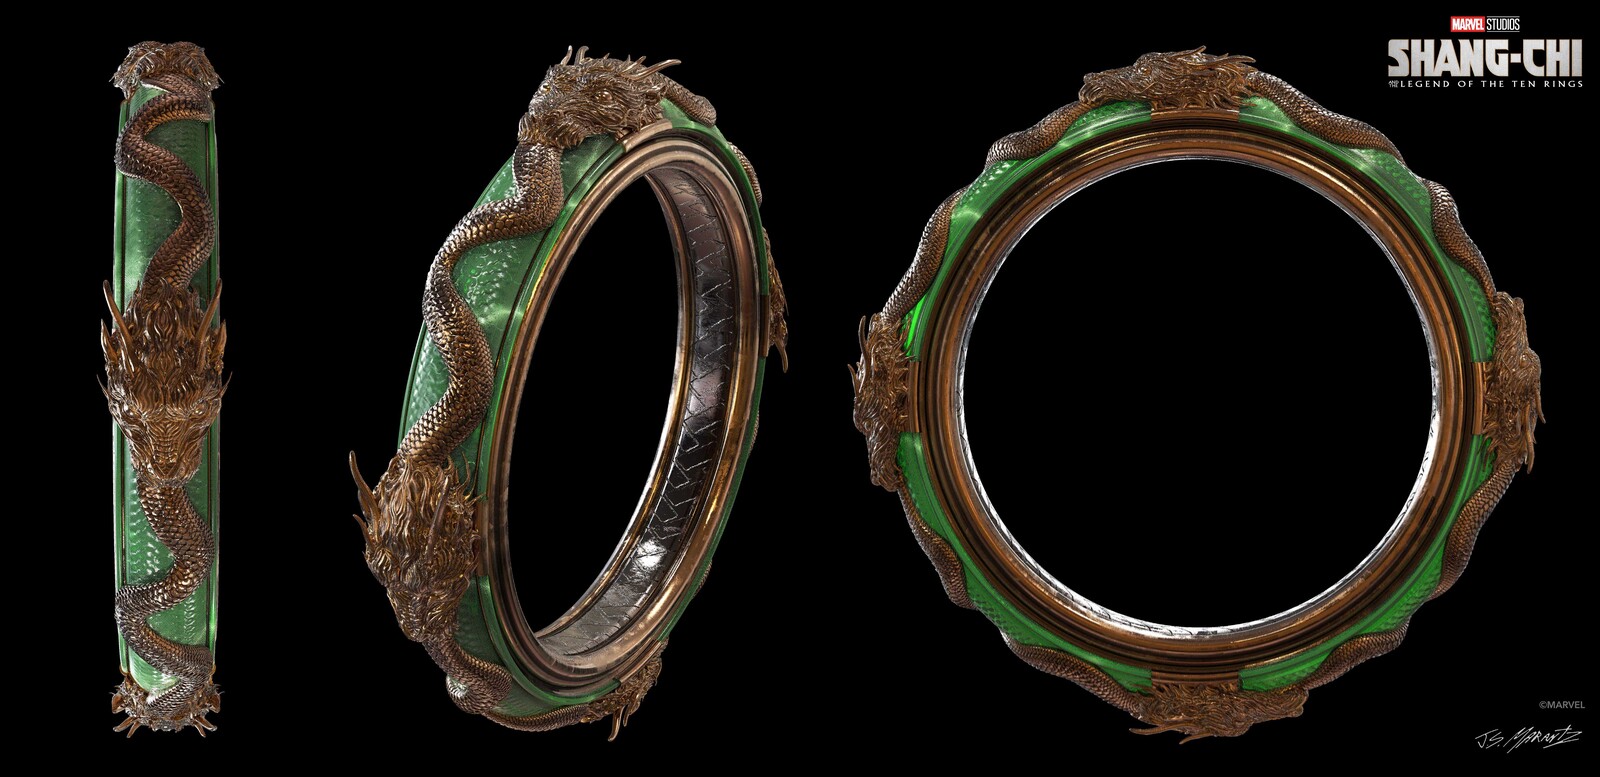 SHANG CHI: Early Ring Designs